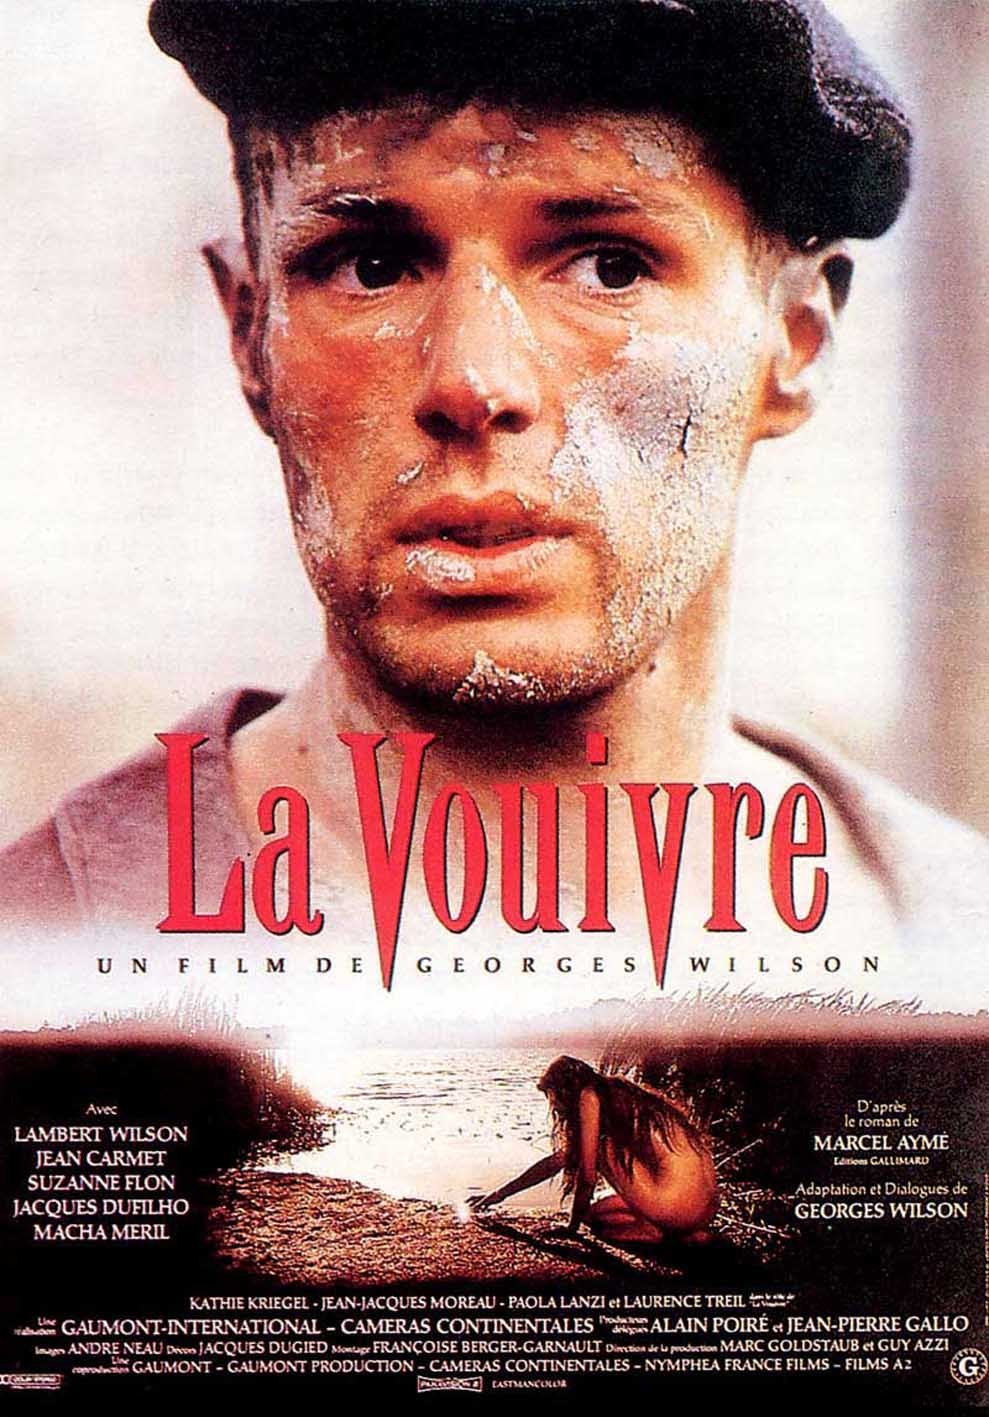 La vouivre (1989) Screenshot 2